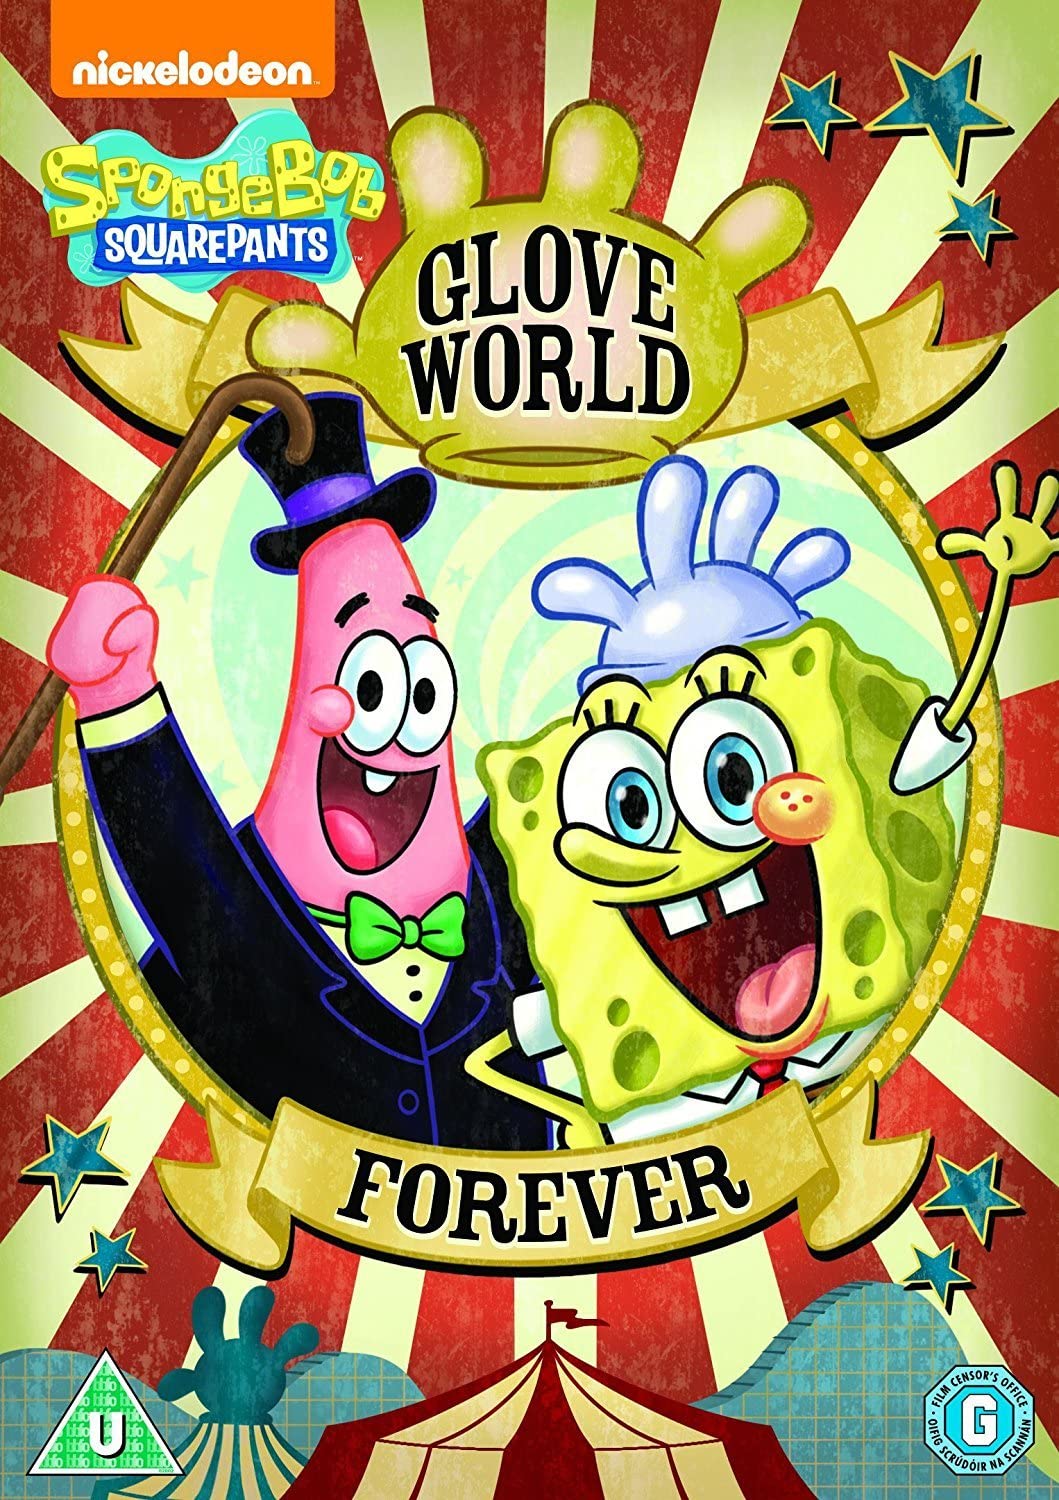 SpongeBob Square Pants: Glove World Forever [2016] - Animation [DVD]